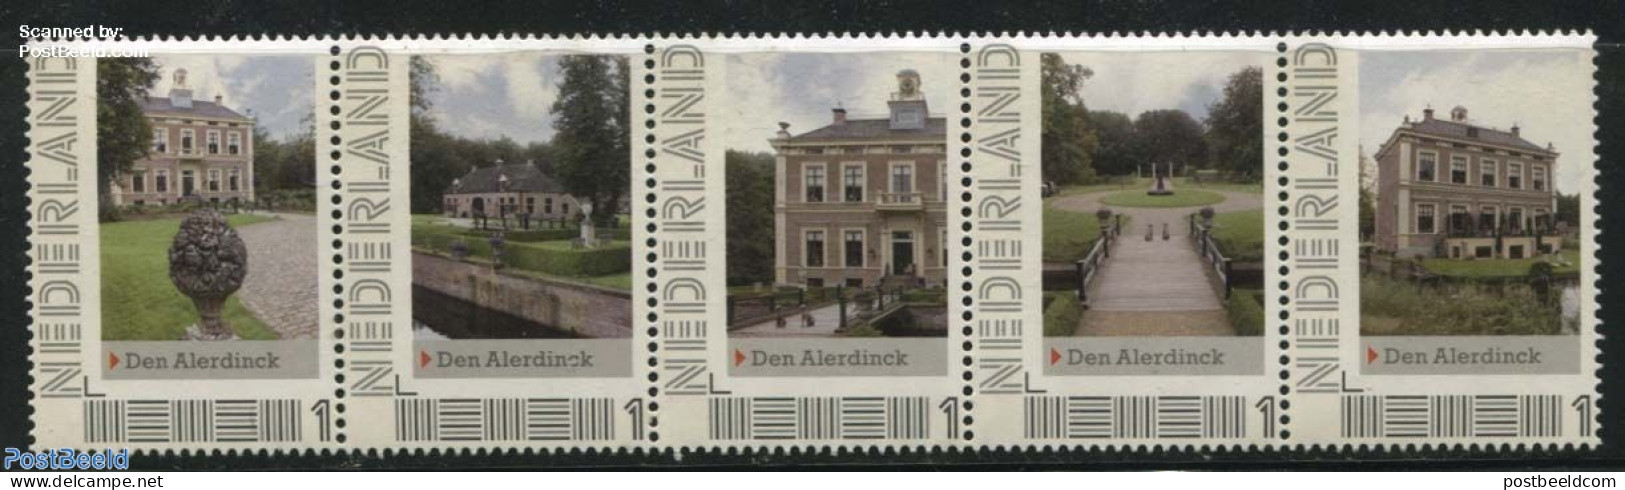 Netherlands - Personal Stamps TNT/PNL 2012 Den Alerdinck 4V [::::], Mint NH, Nature - Trees & Forests - Castles & Fort.. - Rotary, Lions Club